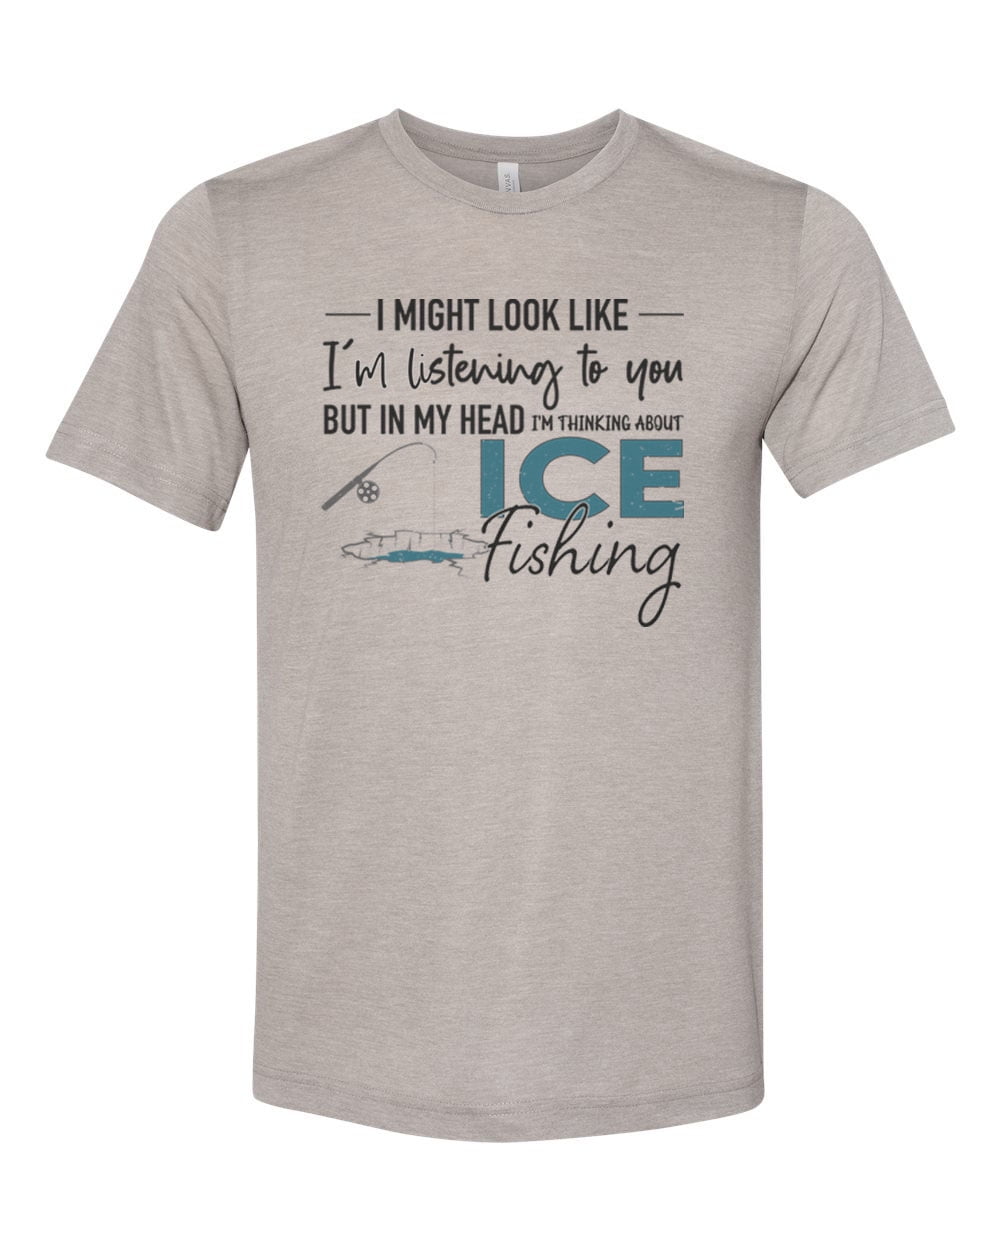 Ice Fishing Shirt, Thinking About Ice Fishing, Fishing Shirt